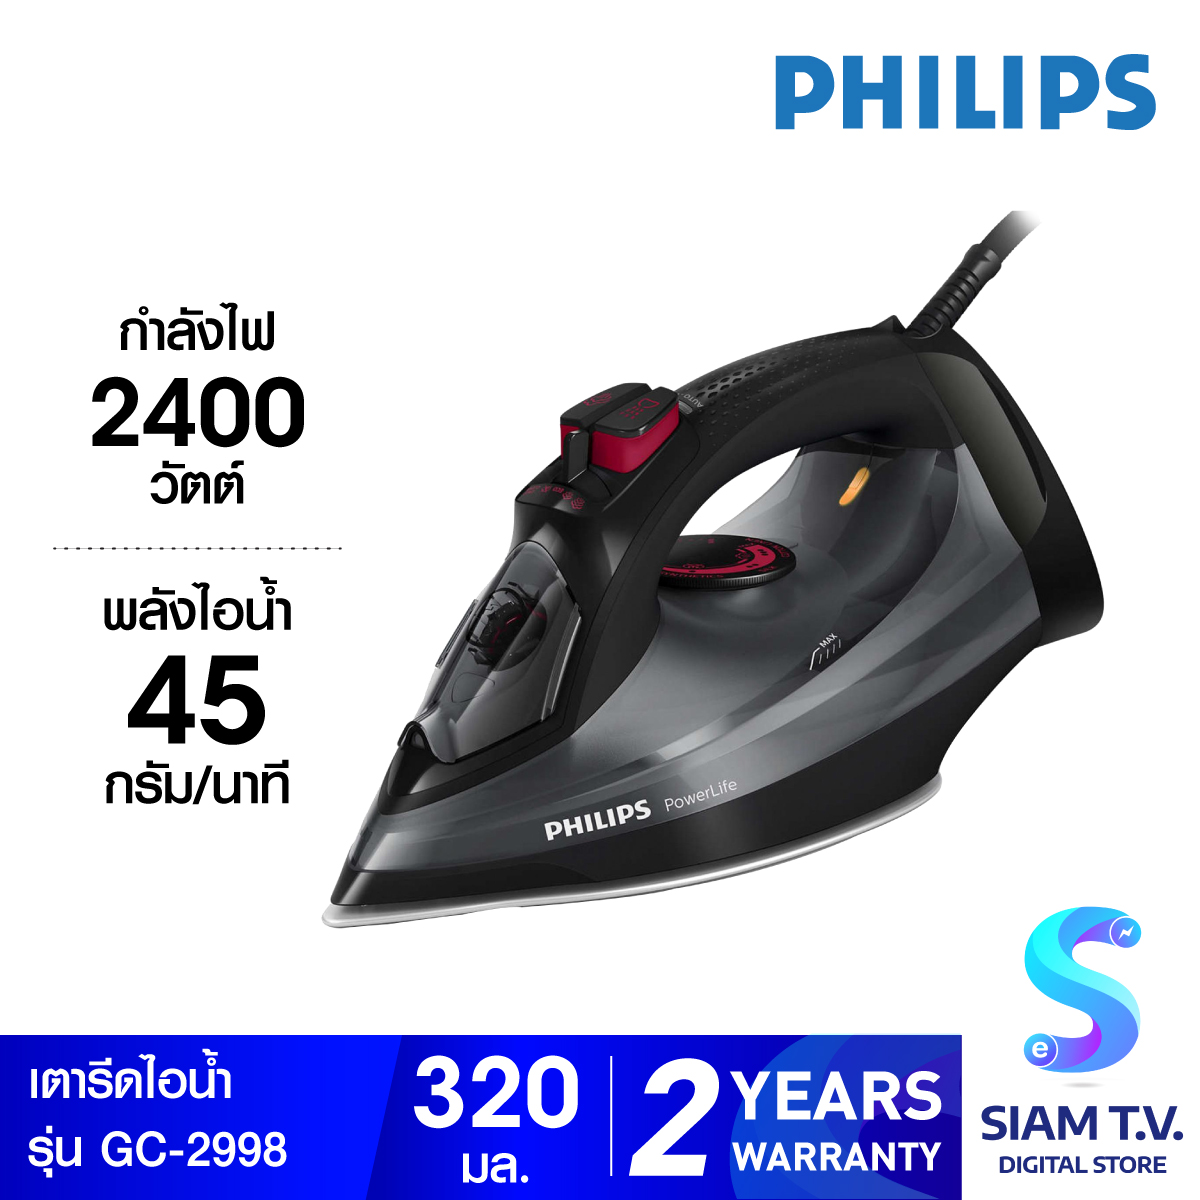 Philips PowerLife เตารีดไอน้ำ รุ่น GC2998 80 โดย สยามทีวี by Siam T.V.